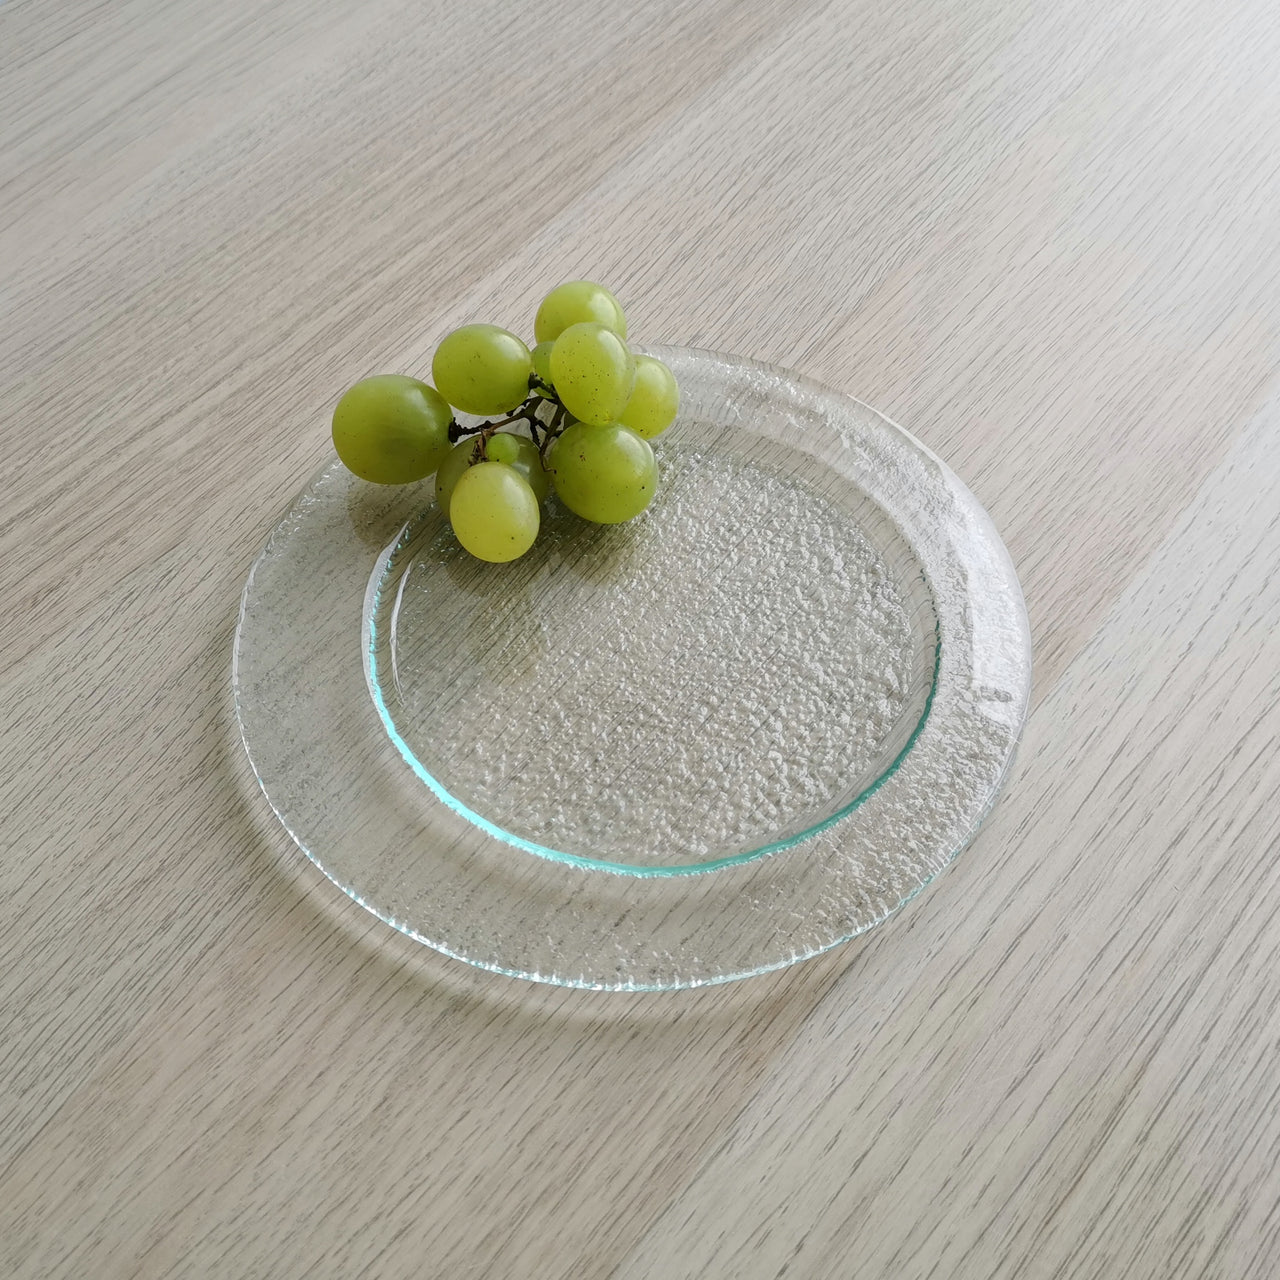 City Minimalist Transparent Glass Plate. Small Transparent Glass Shifted Center Plate - 7 1/16" (18cm.)